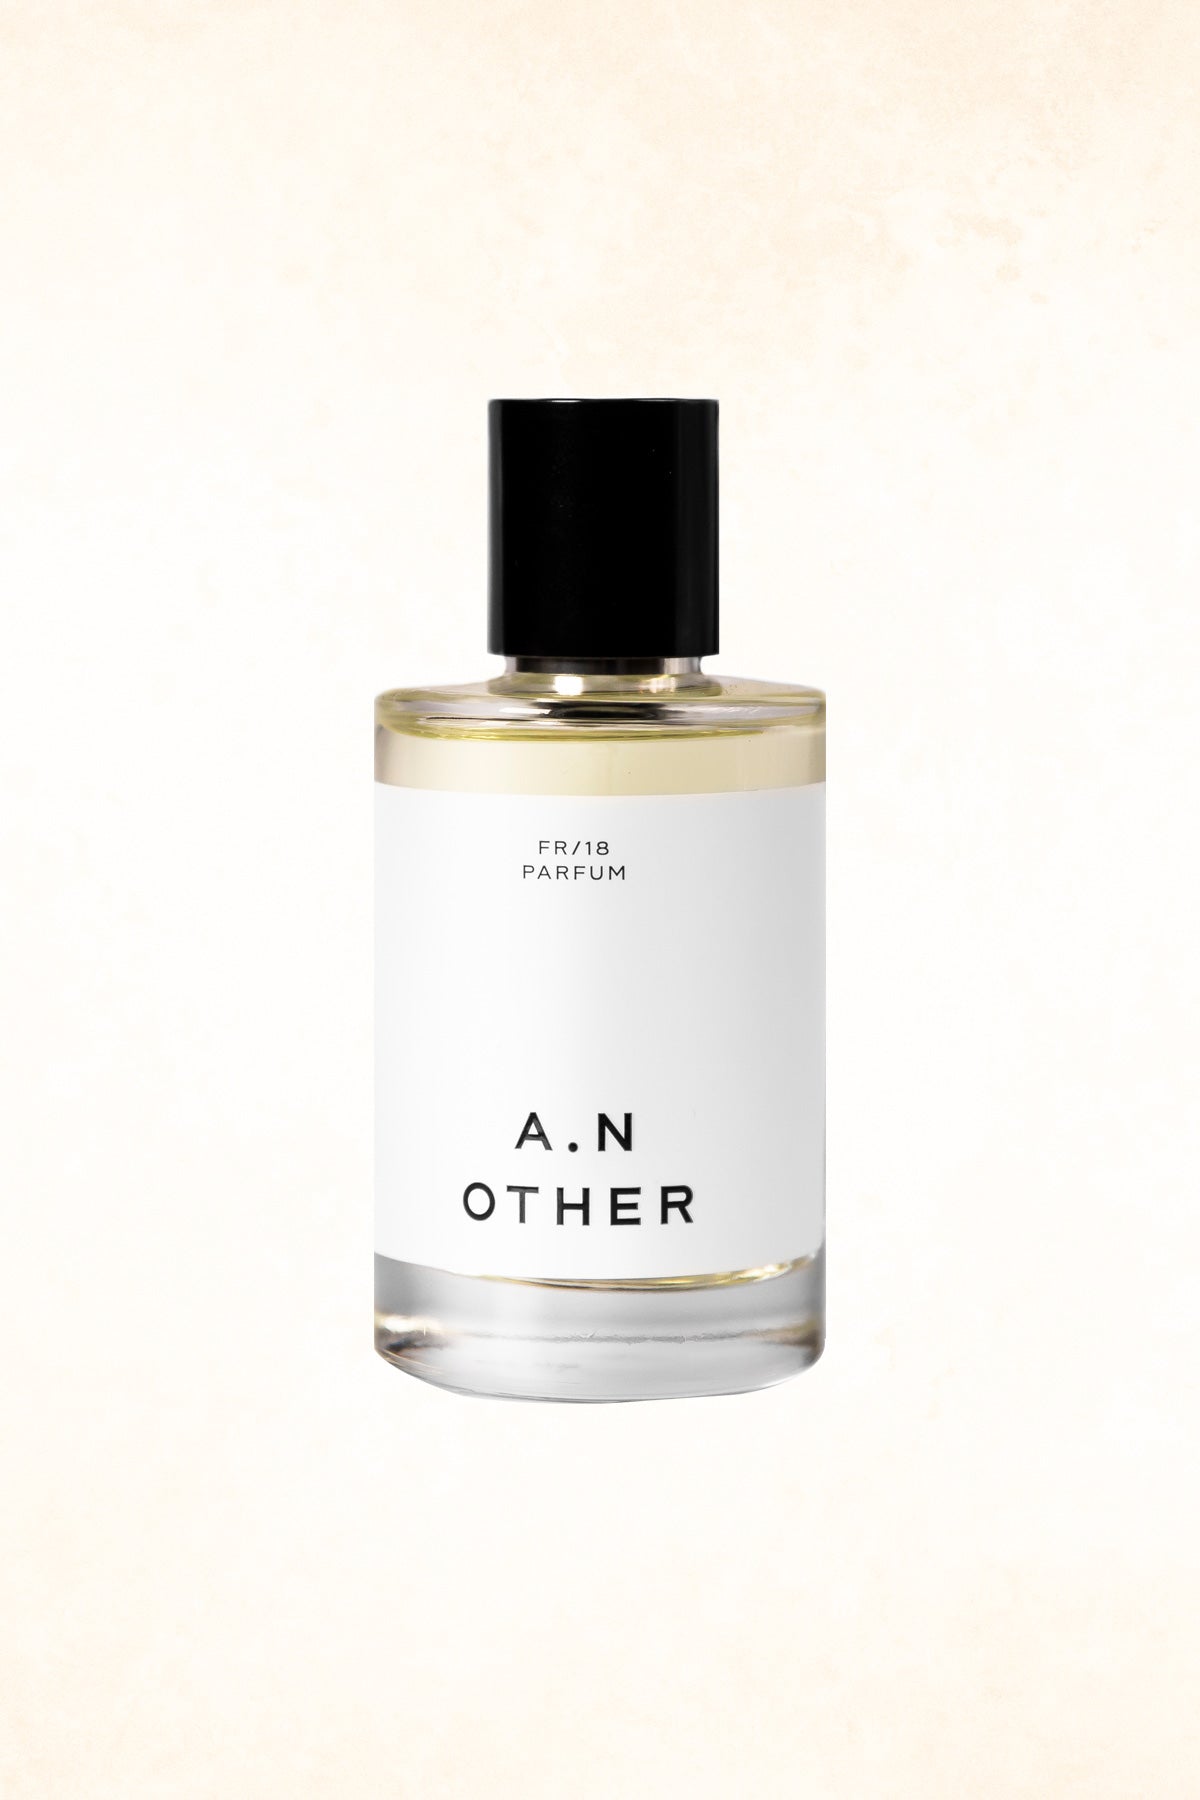 A.N OTHER – FR/2018 Parfum - 100 ml